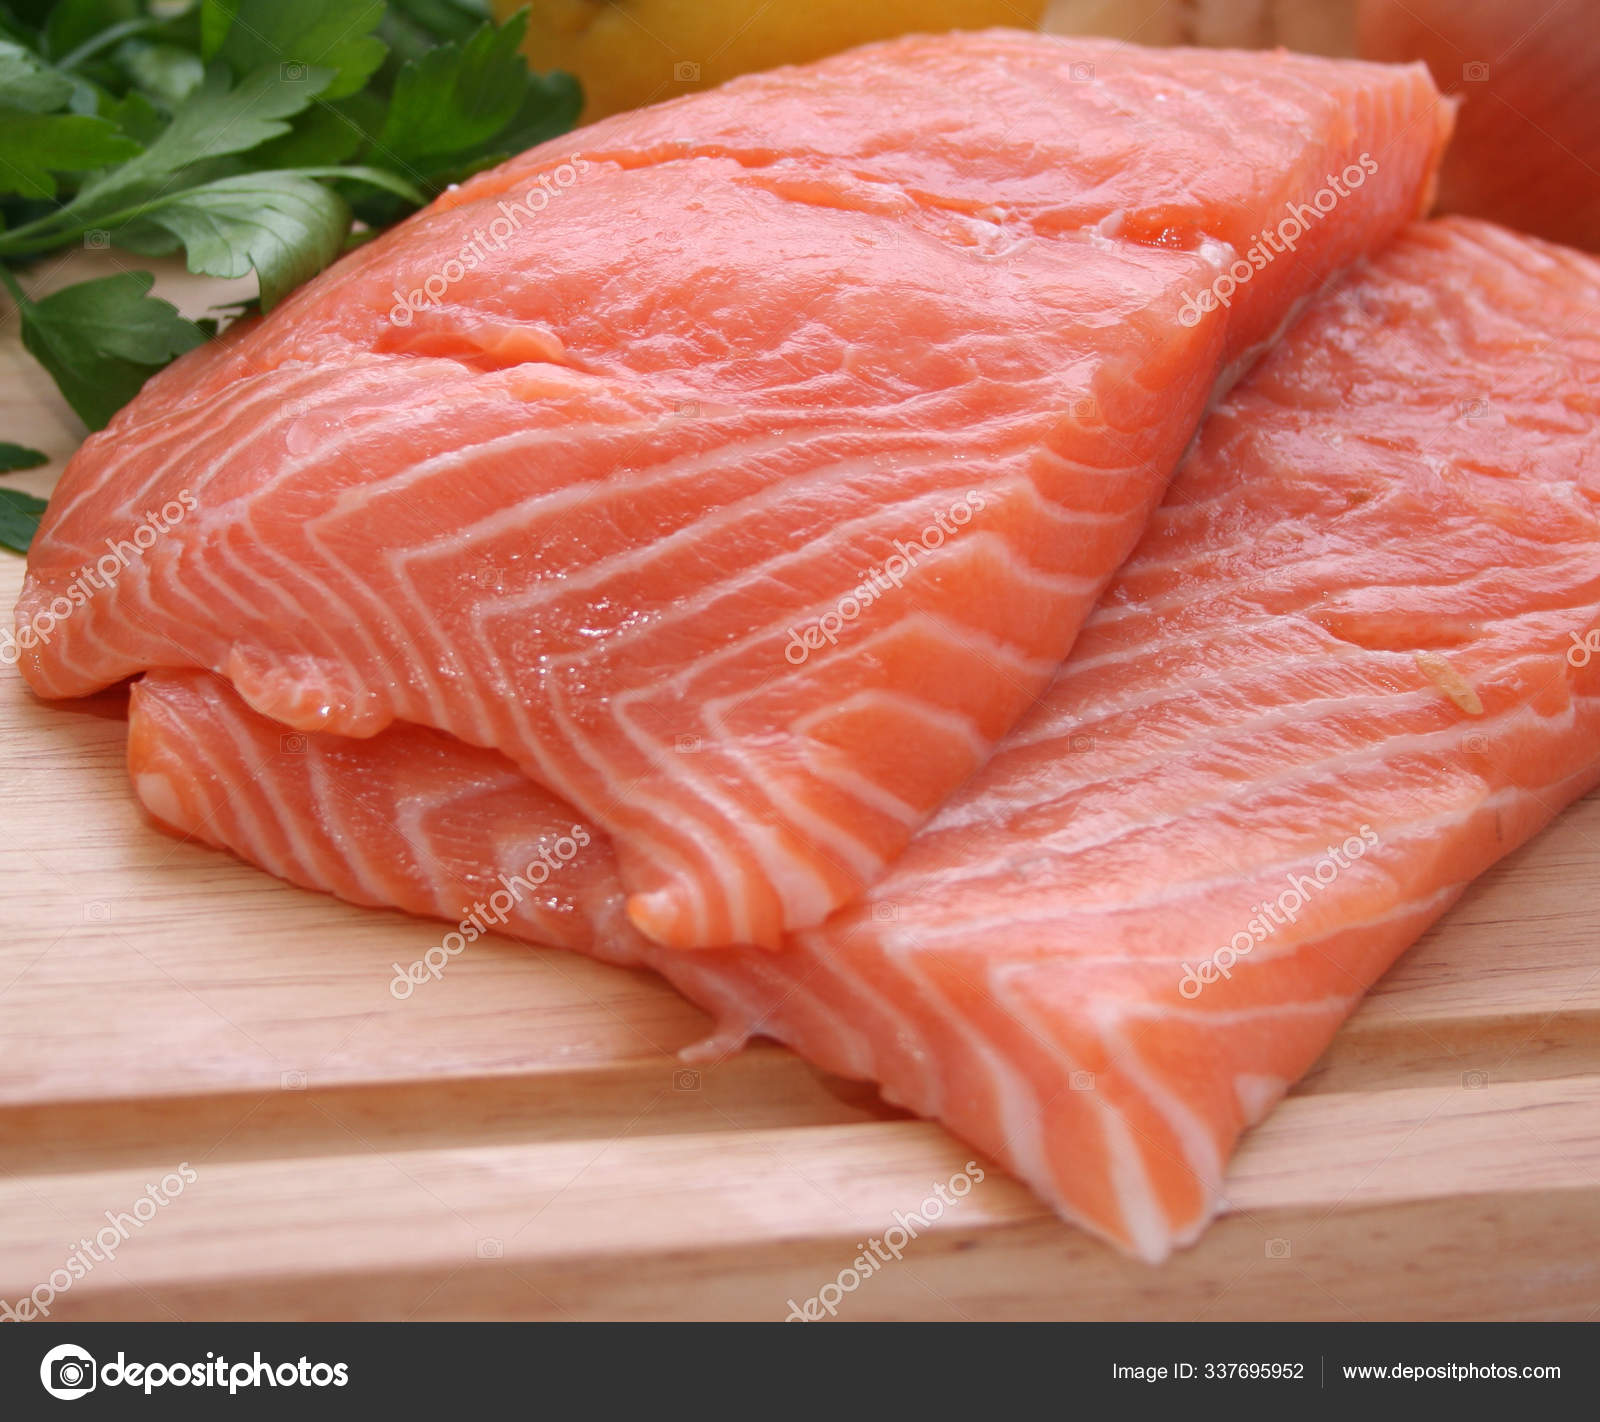 https://st3.depositphotos.com/29384342/33769/i/1600/depositphotos_337695952-stock-photo-appetizing-salmon-fish-meat-sea.jpg